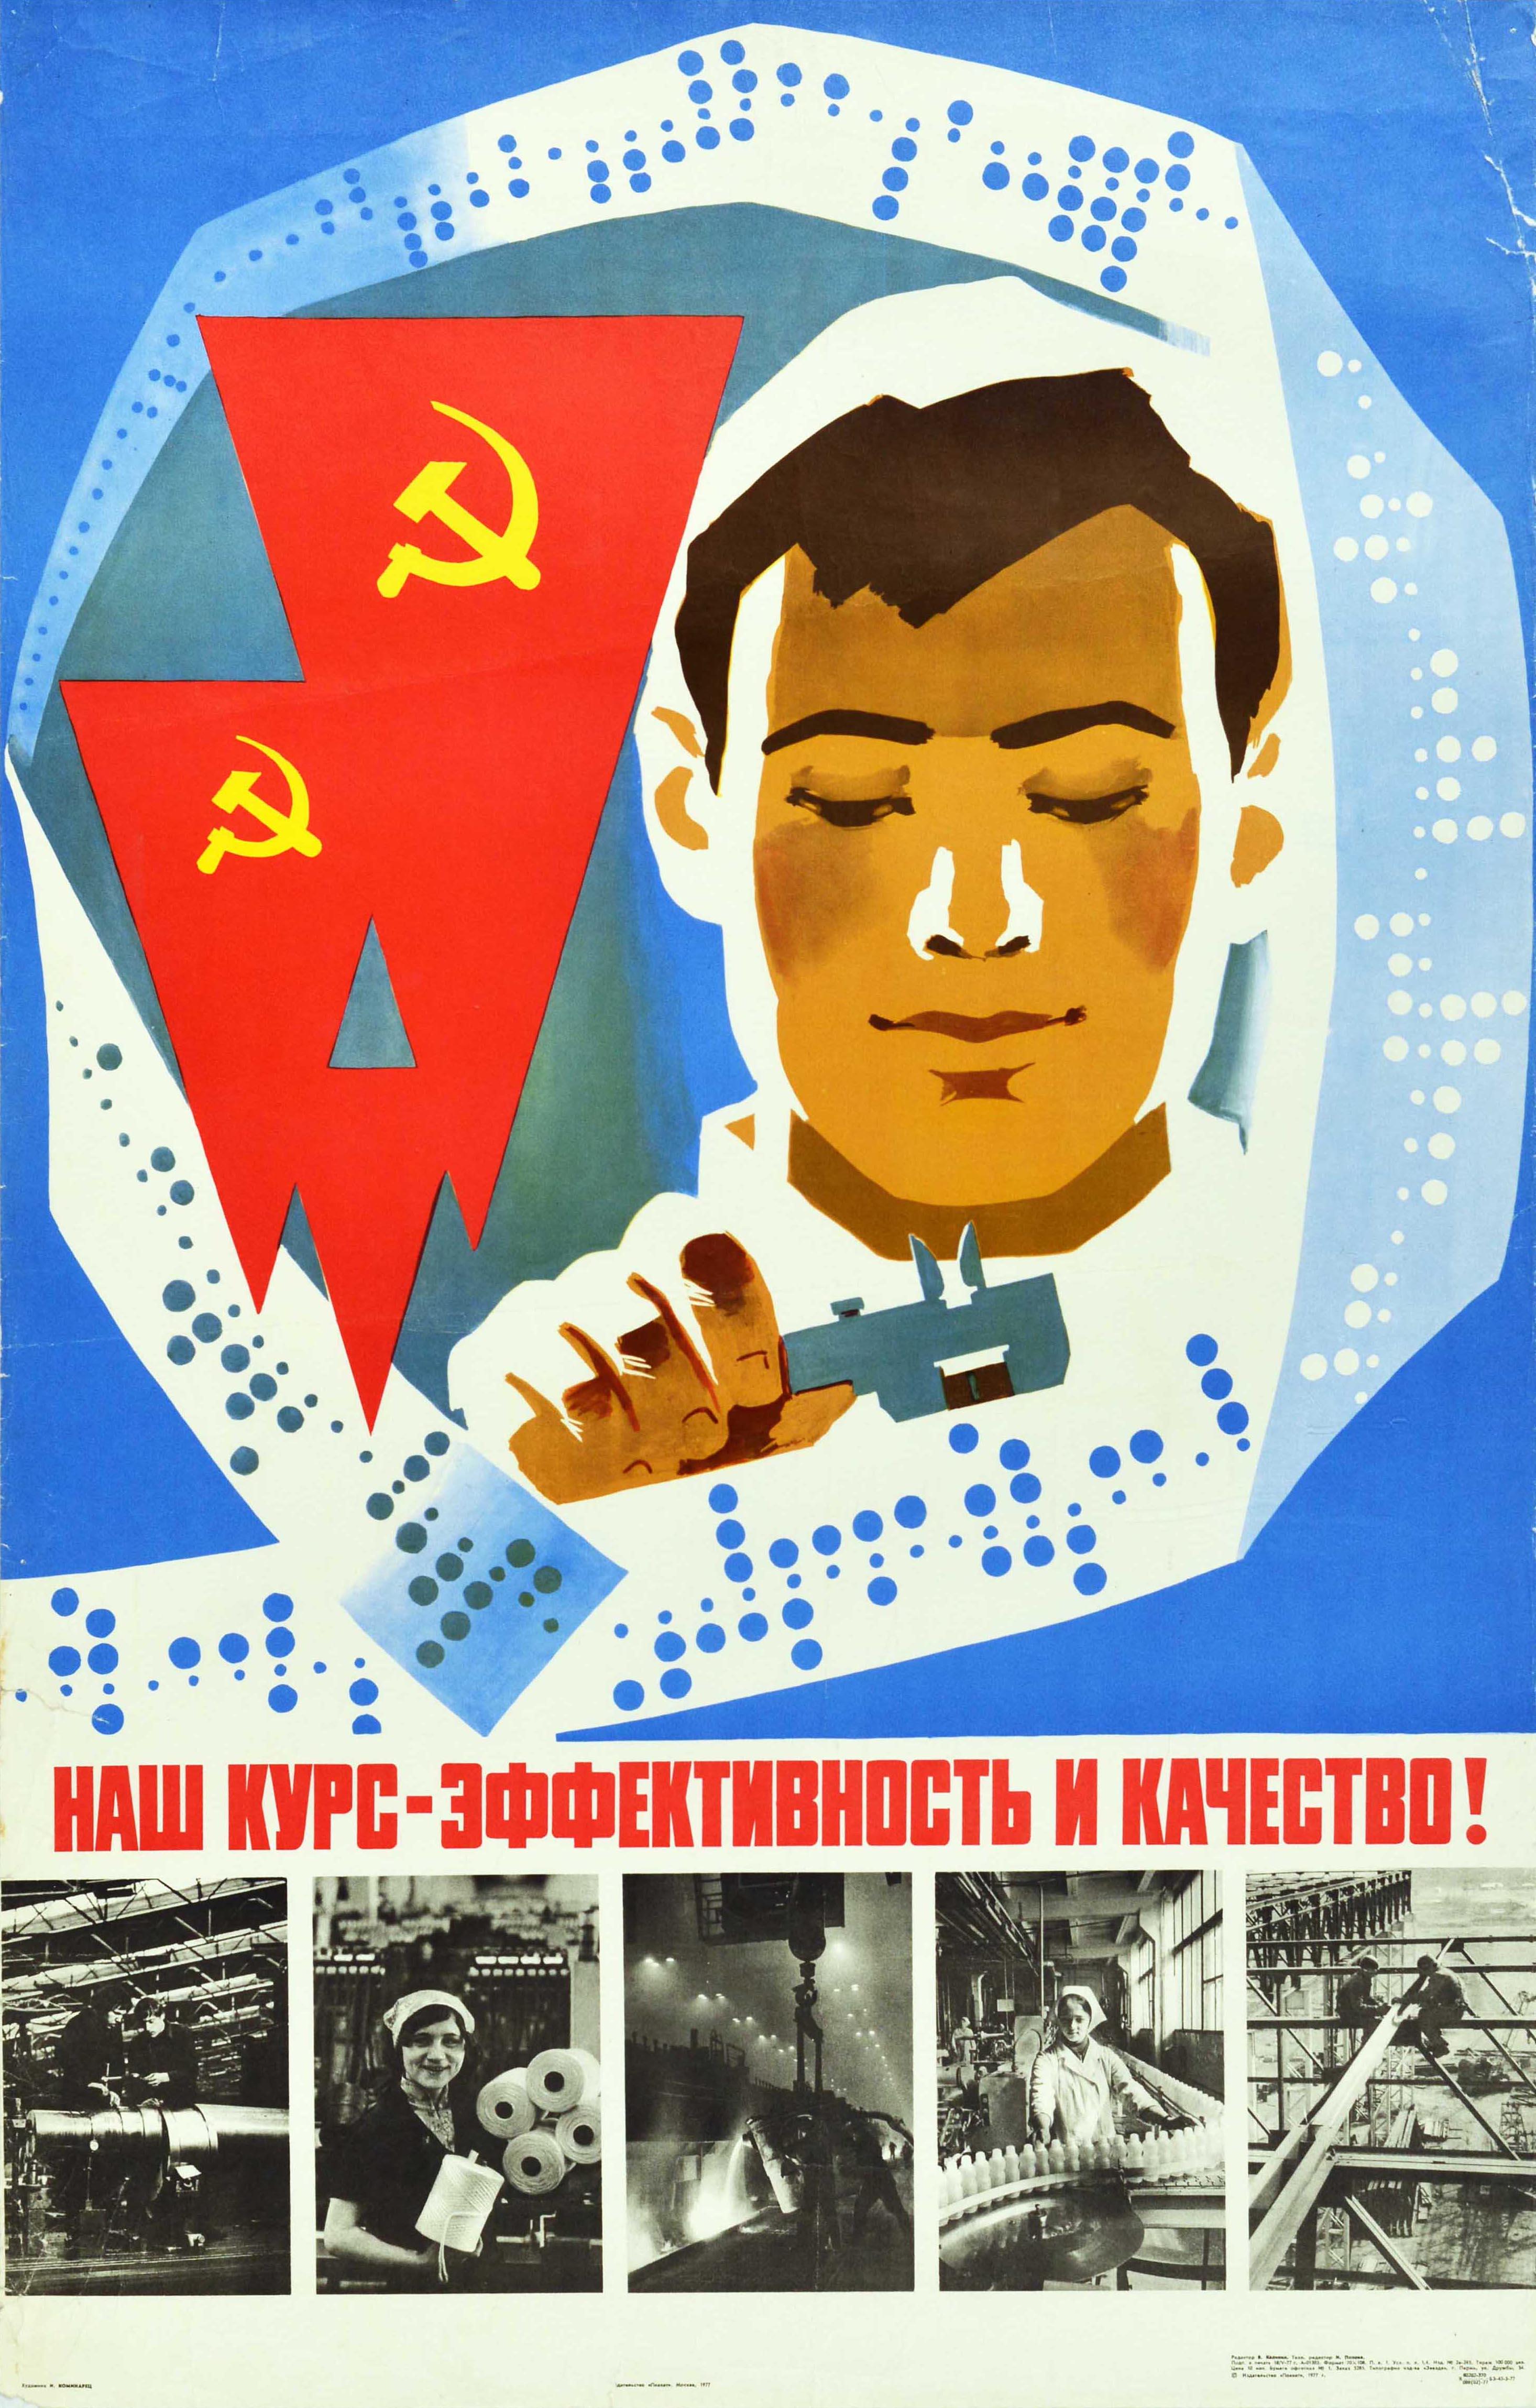 Kominarets Print - Original Vintage Soviet Propaganda Poster Efficiency & Quality Science Industry